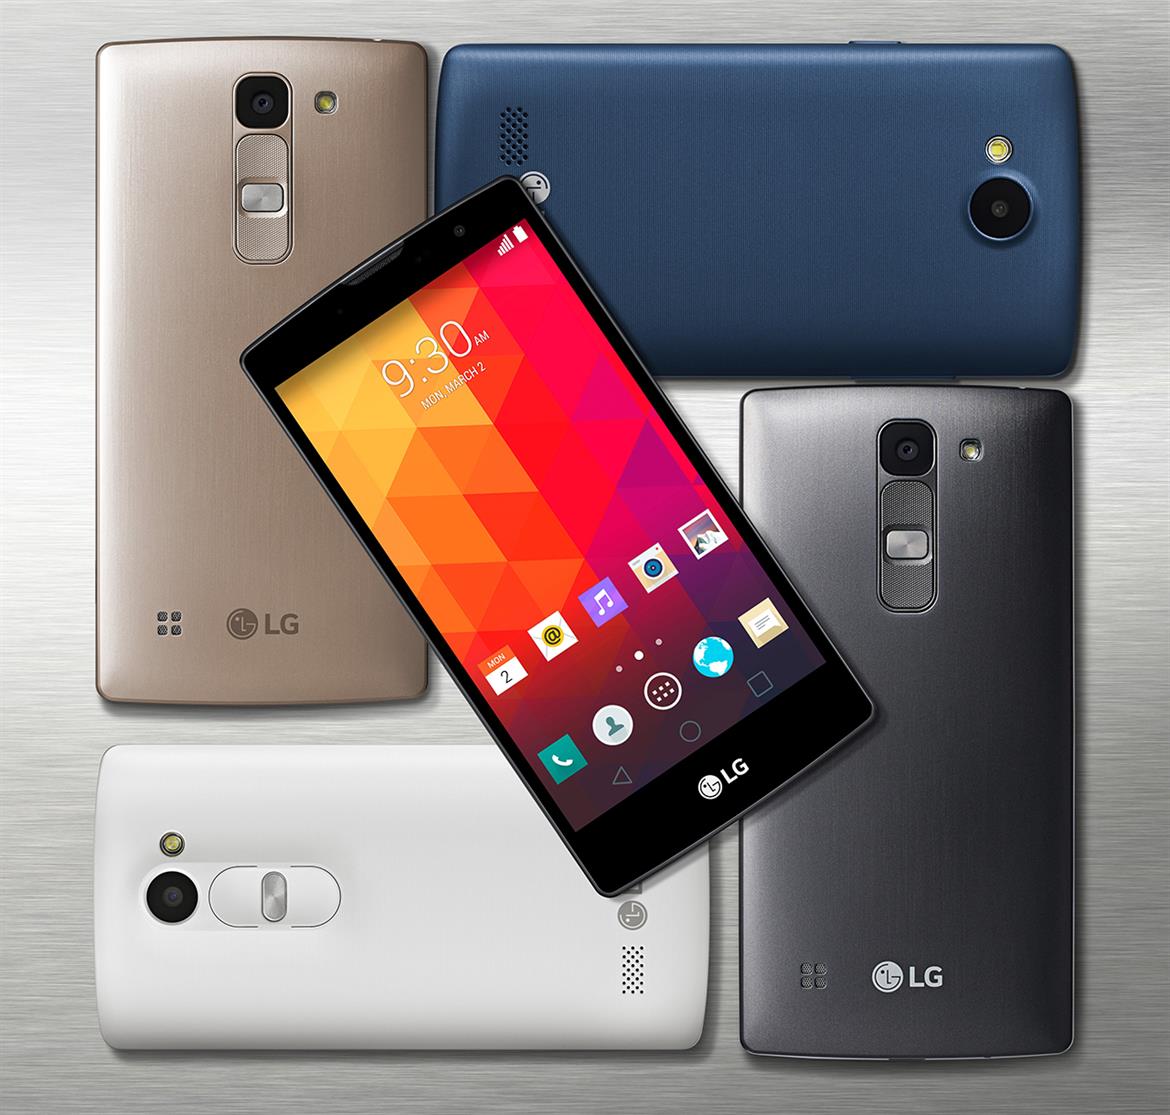 LG Carpet Bombs Mid-Range Smartphone Market With Joy, Leon, Magna, And Spirit